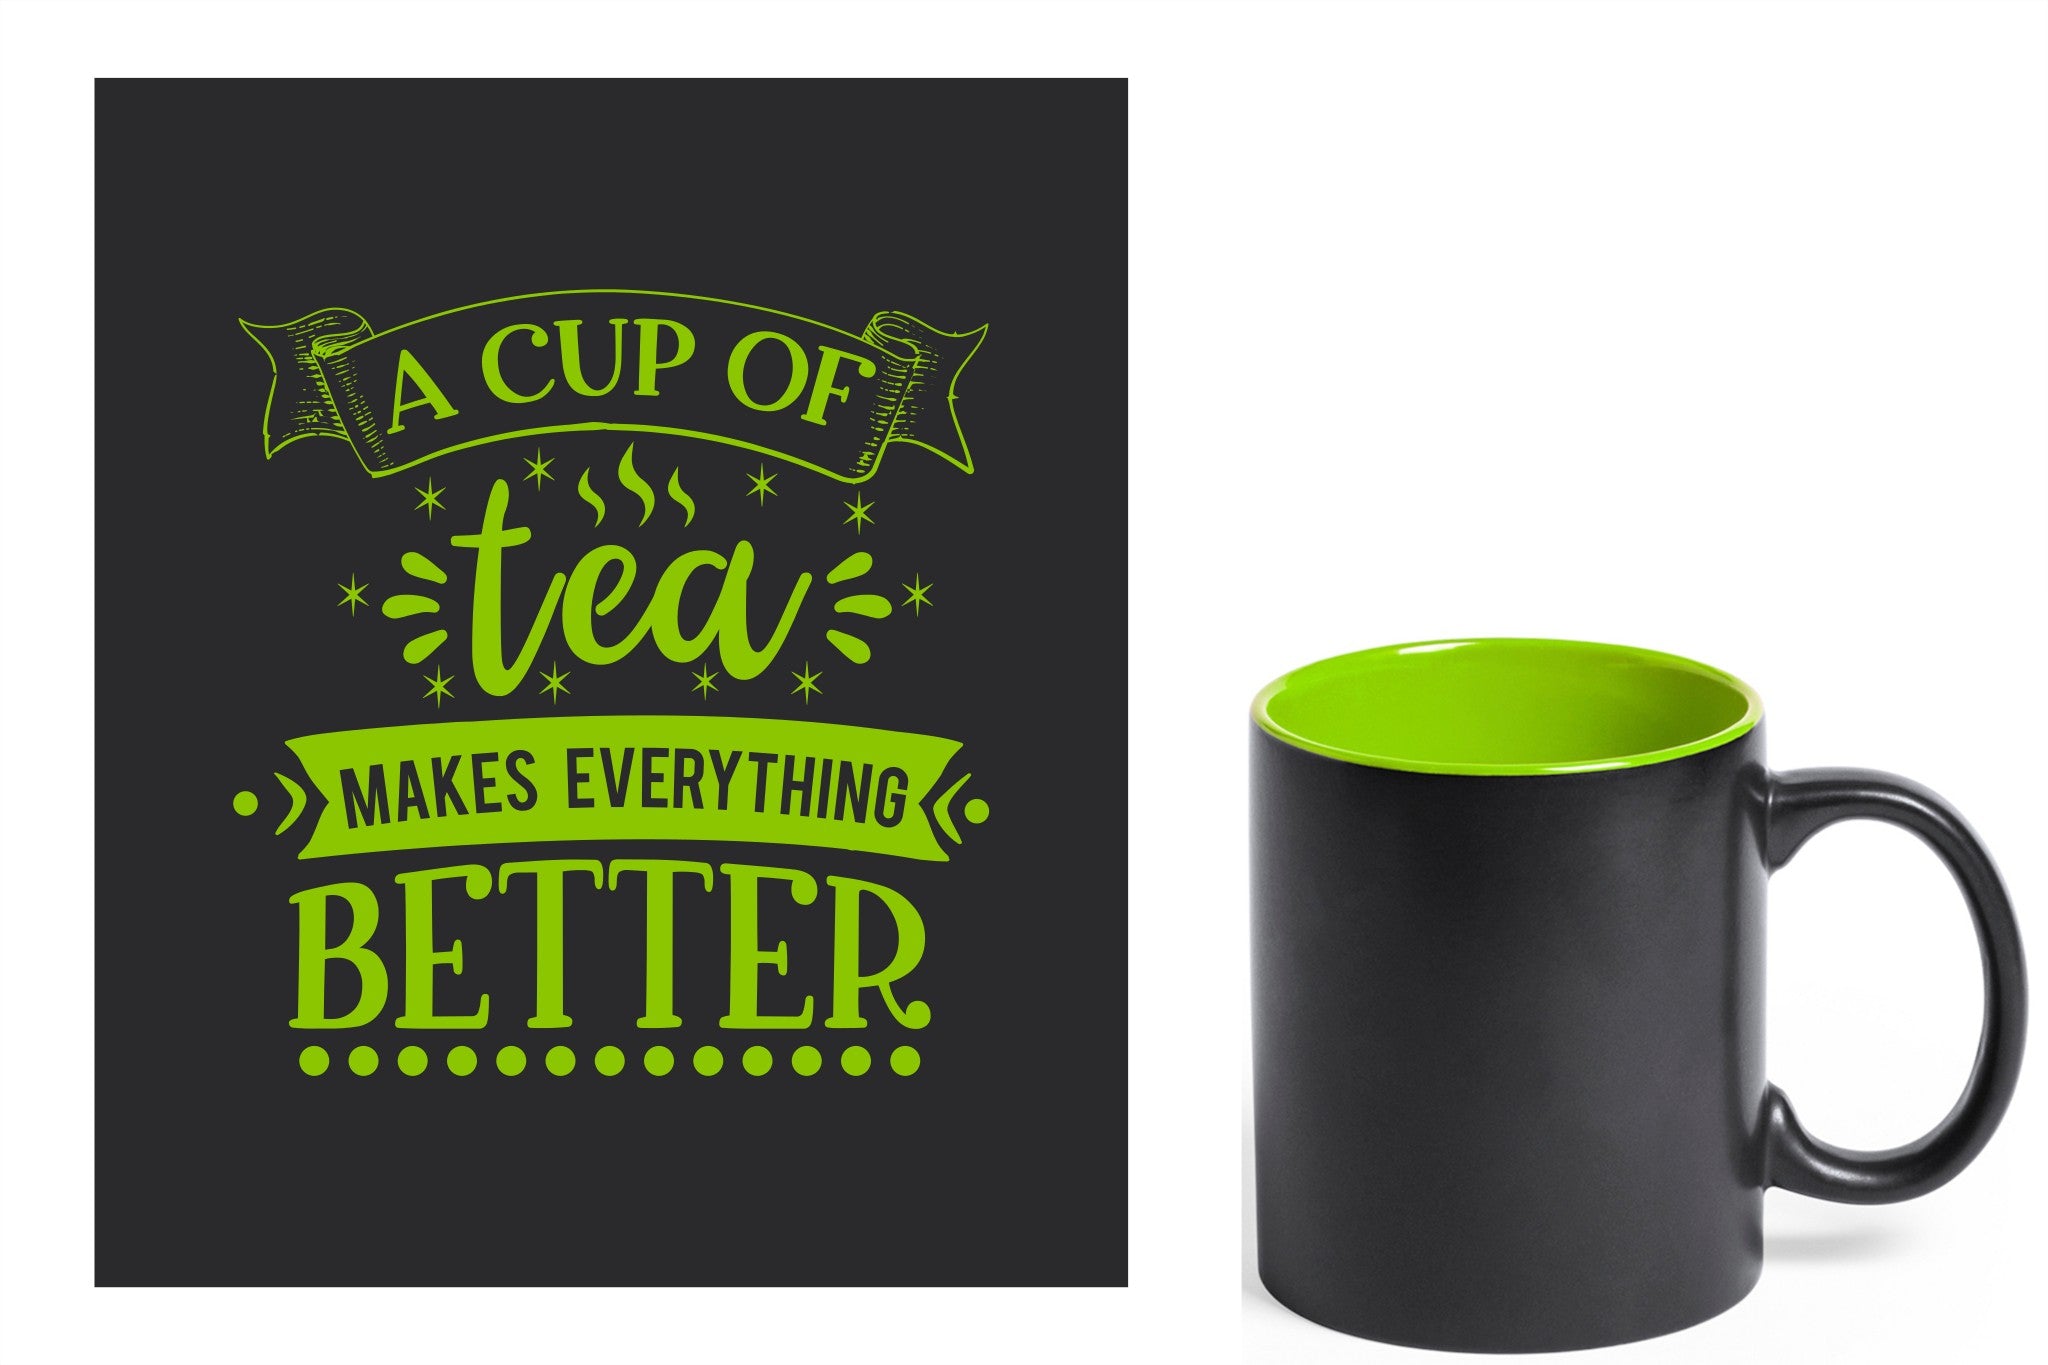 zwarte keramische mok met groene gravure  'A cup of tea makes everything better'.